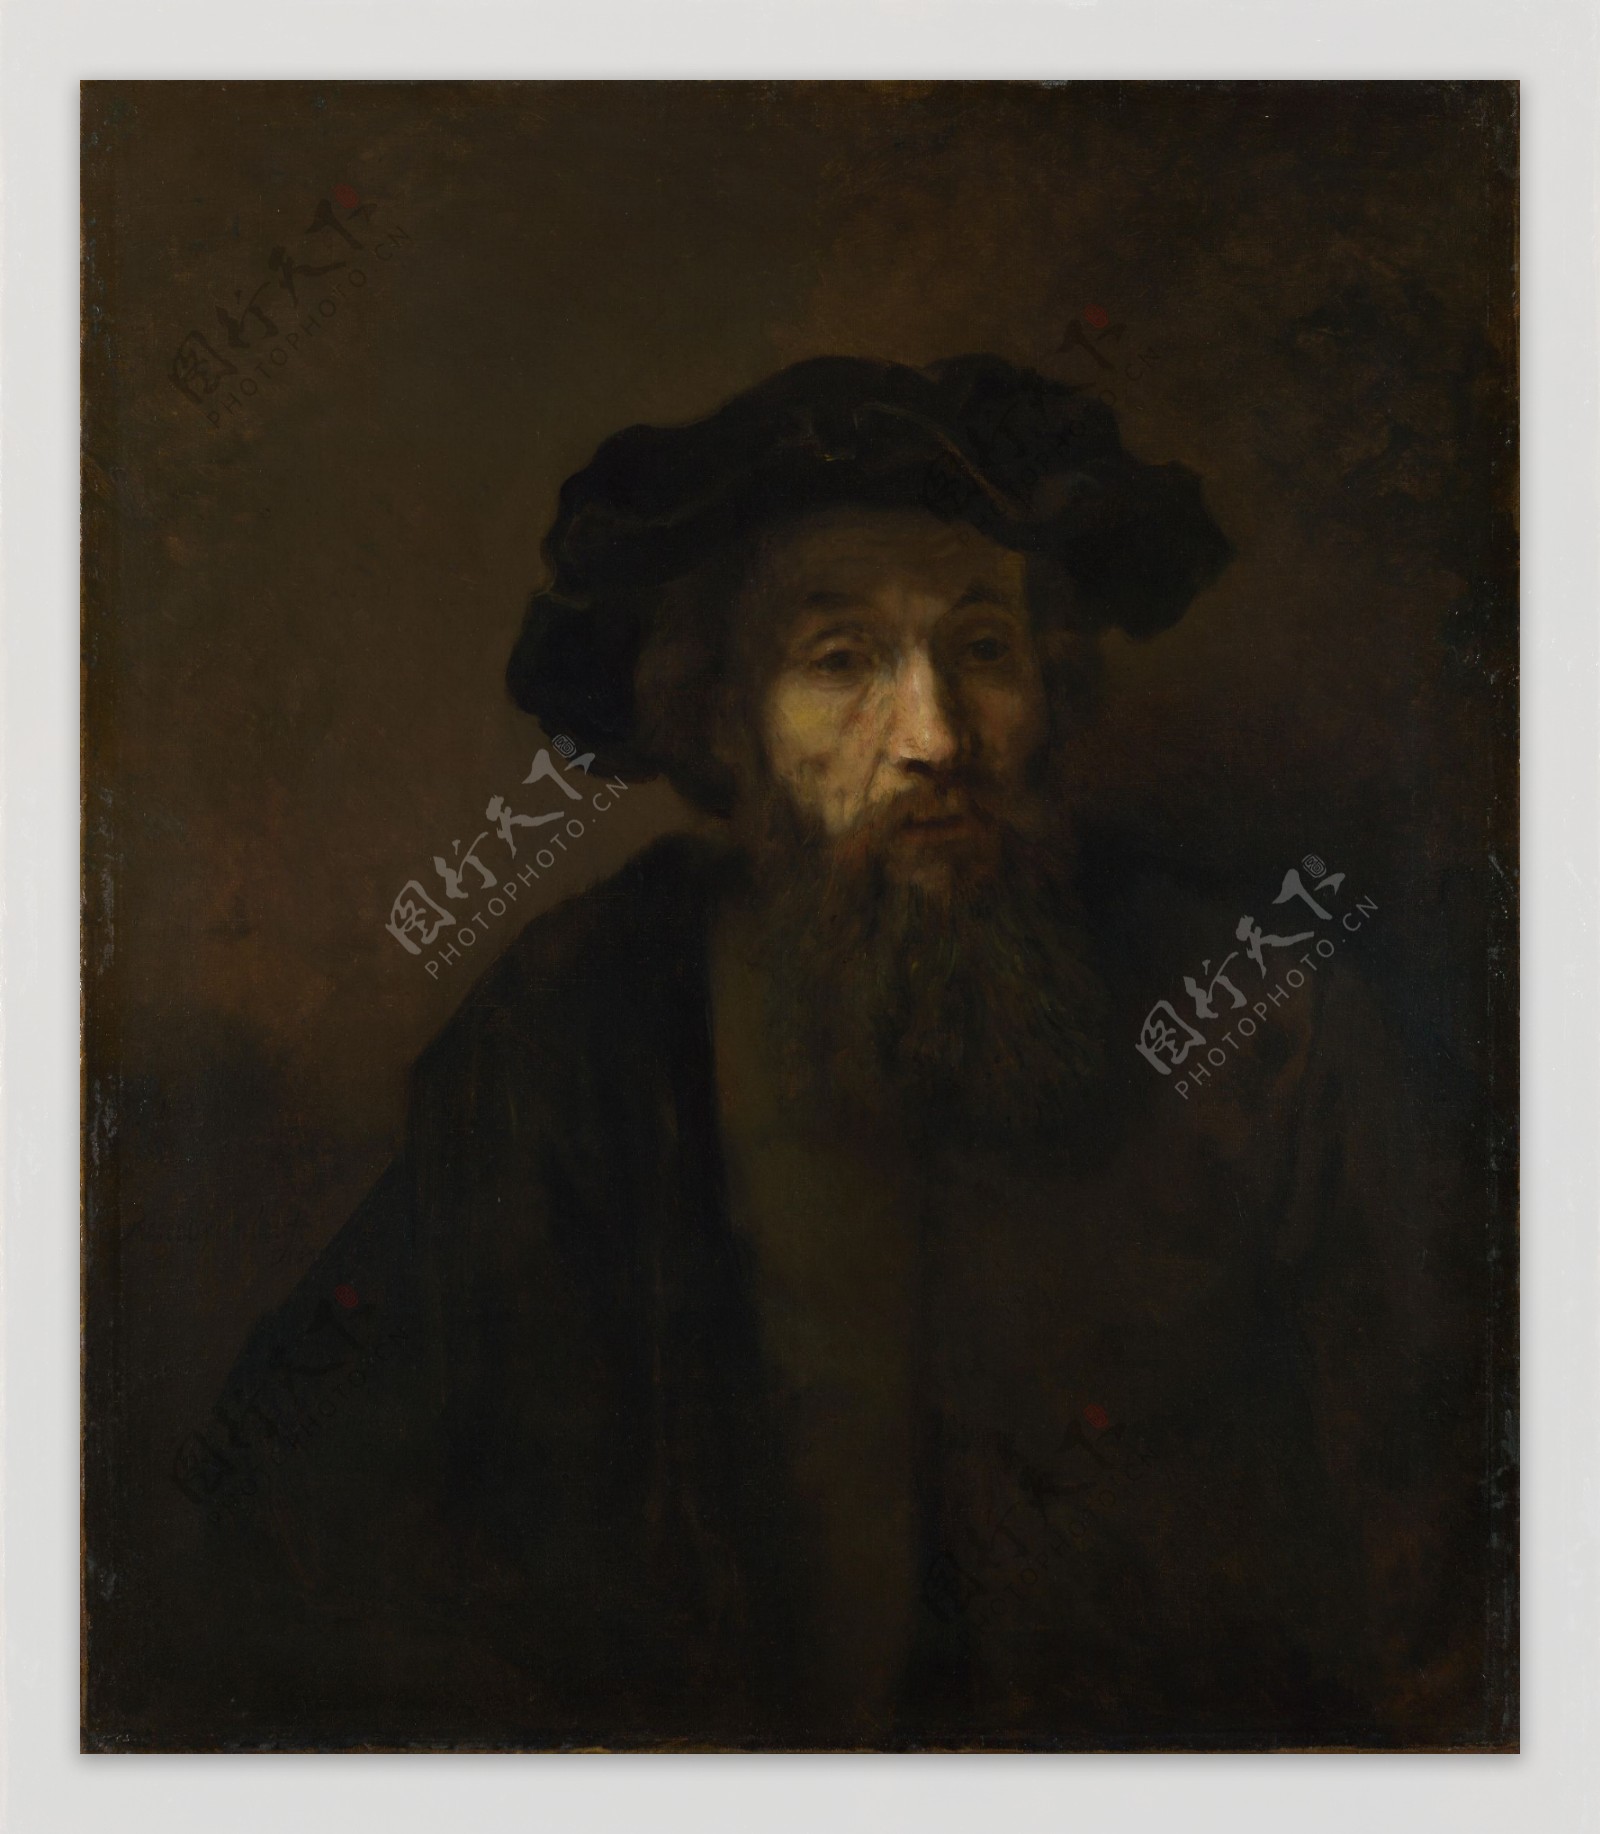 RembrandtABeardedManinaCap高清西方古典人物宗教人物神话人物巴洛克艺术油画装饰画